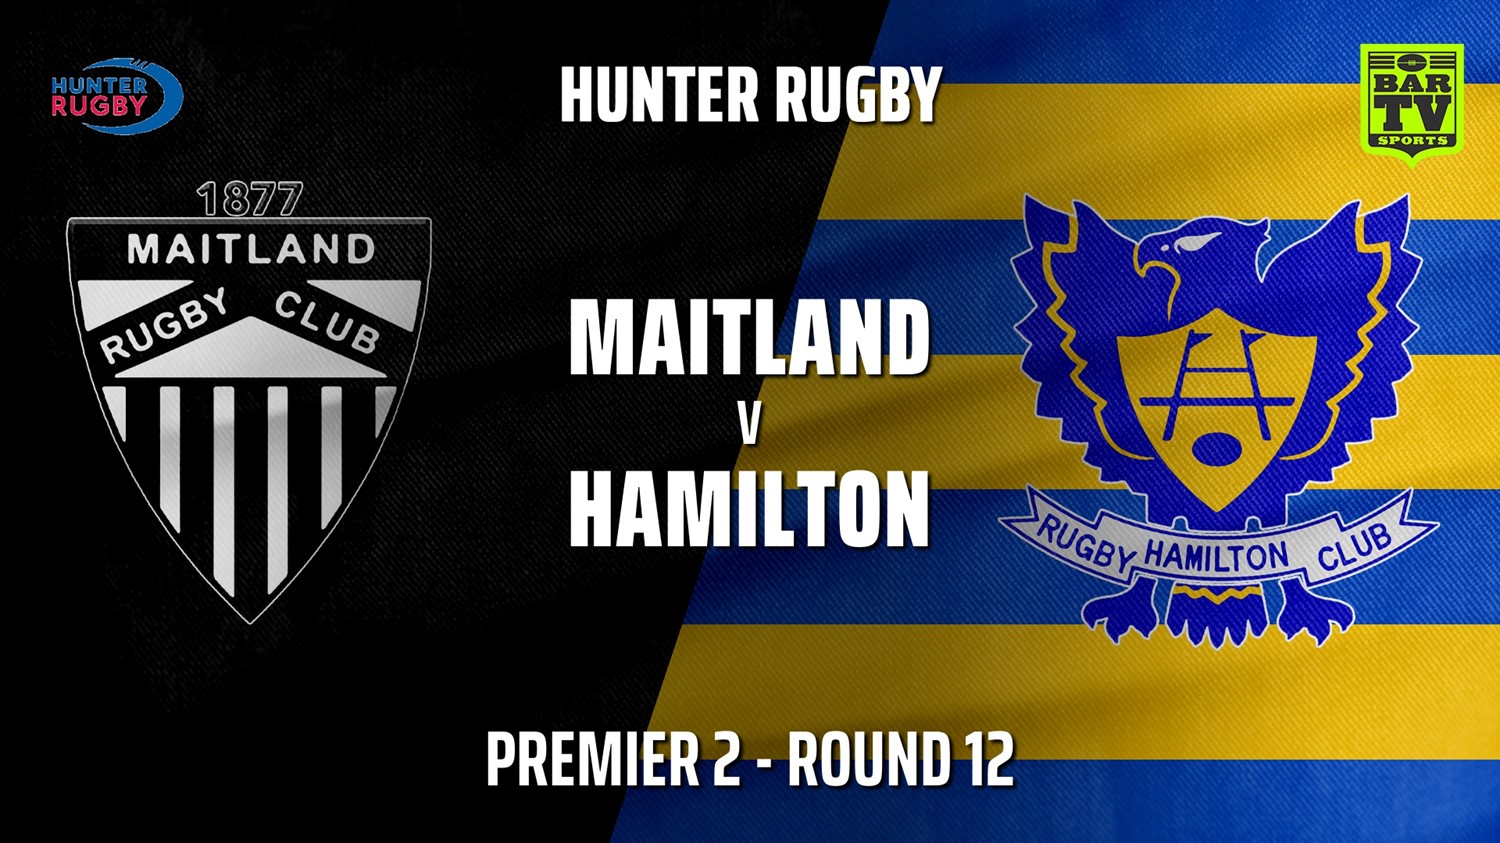 210710-Hunter Rugby Round 12 - Premier 2 - Maitland v Hamilton Hawks Slate Image